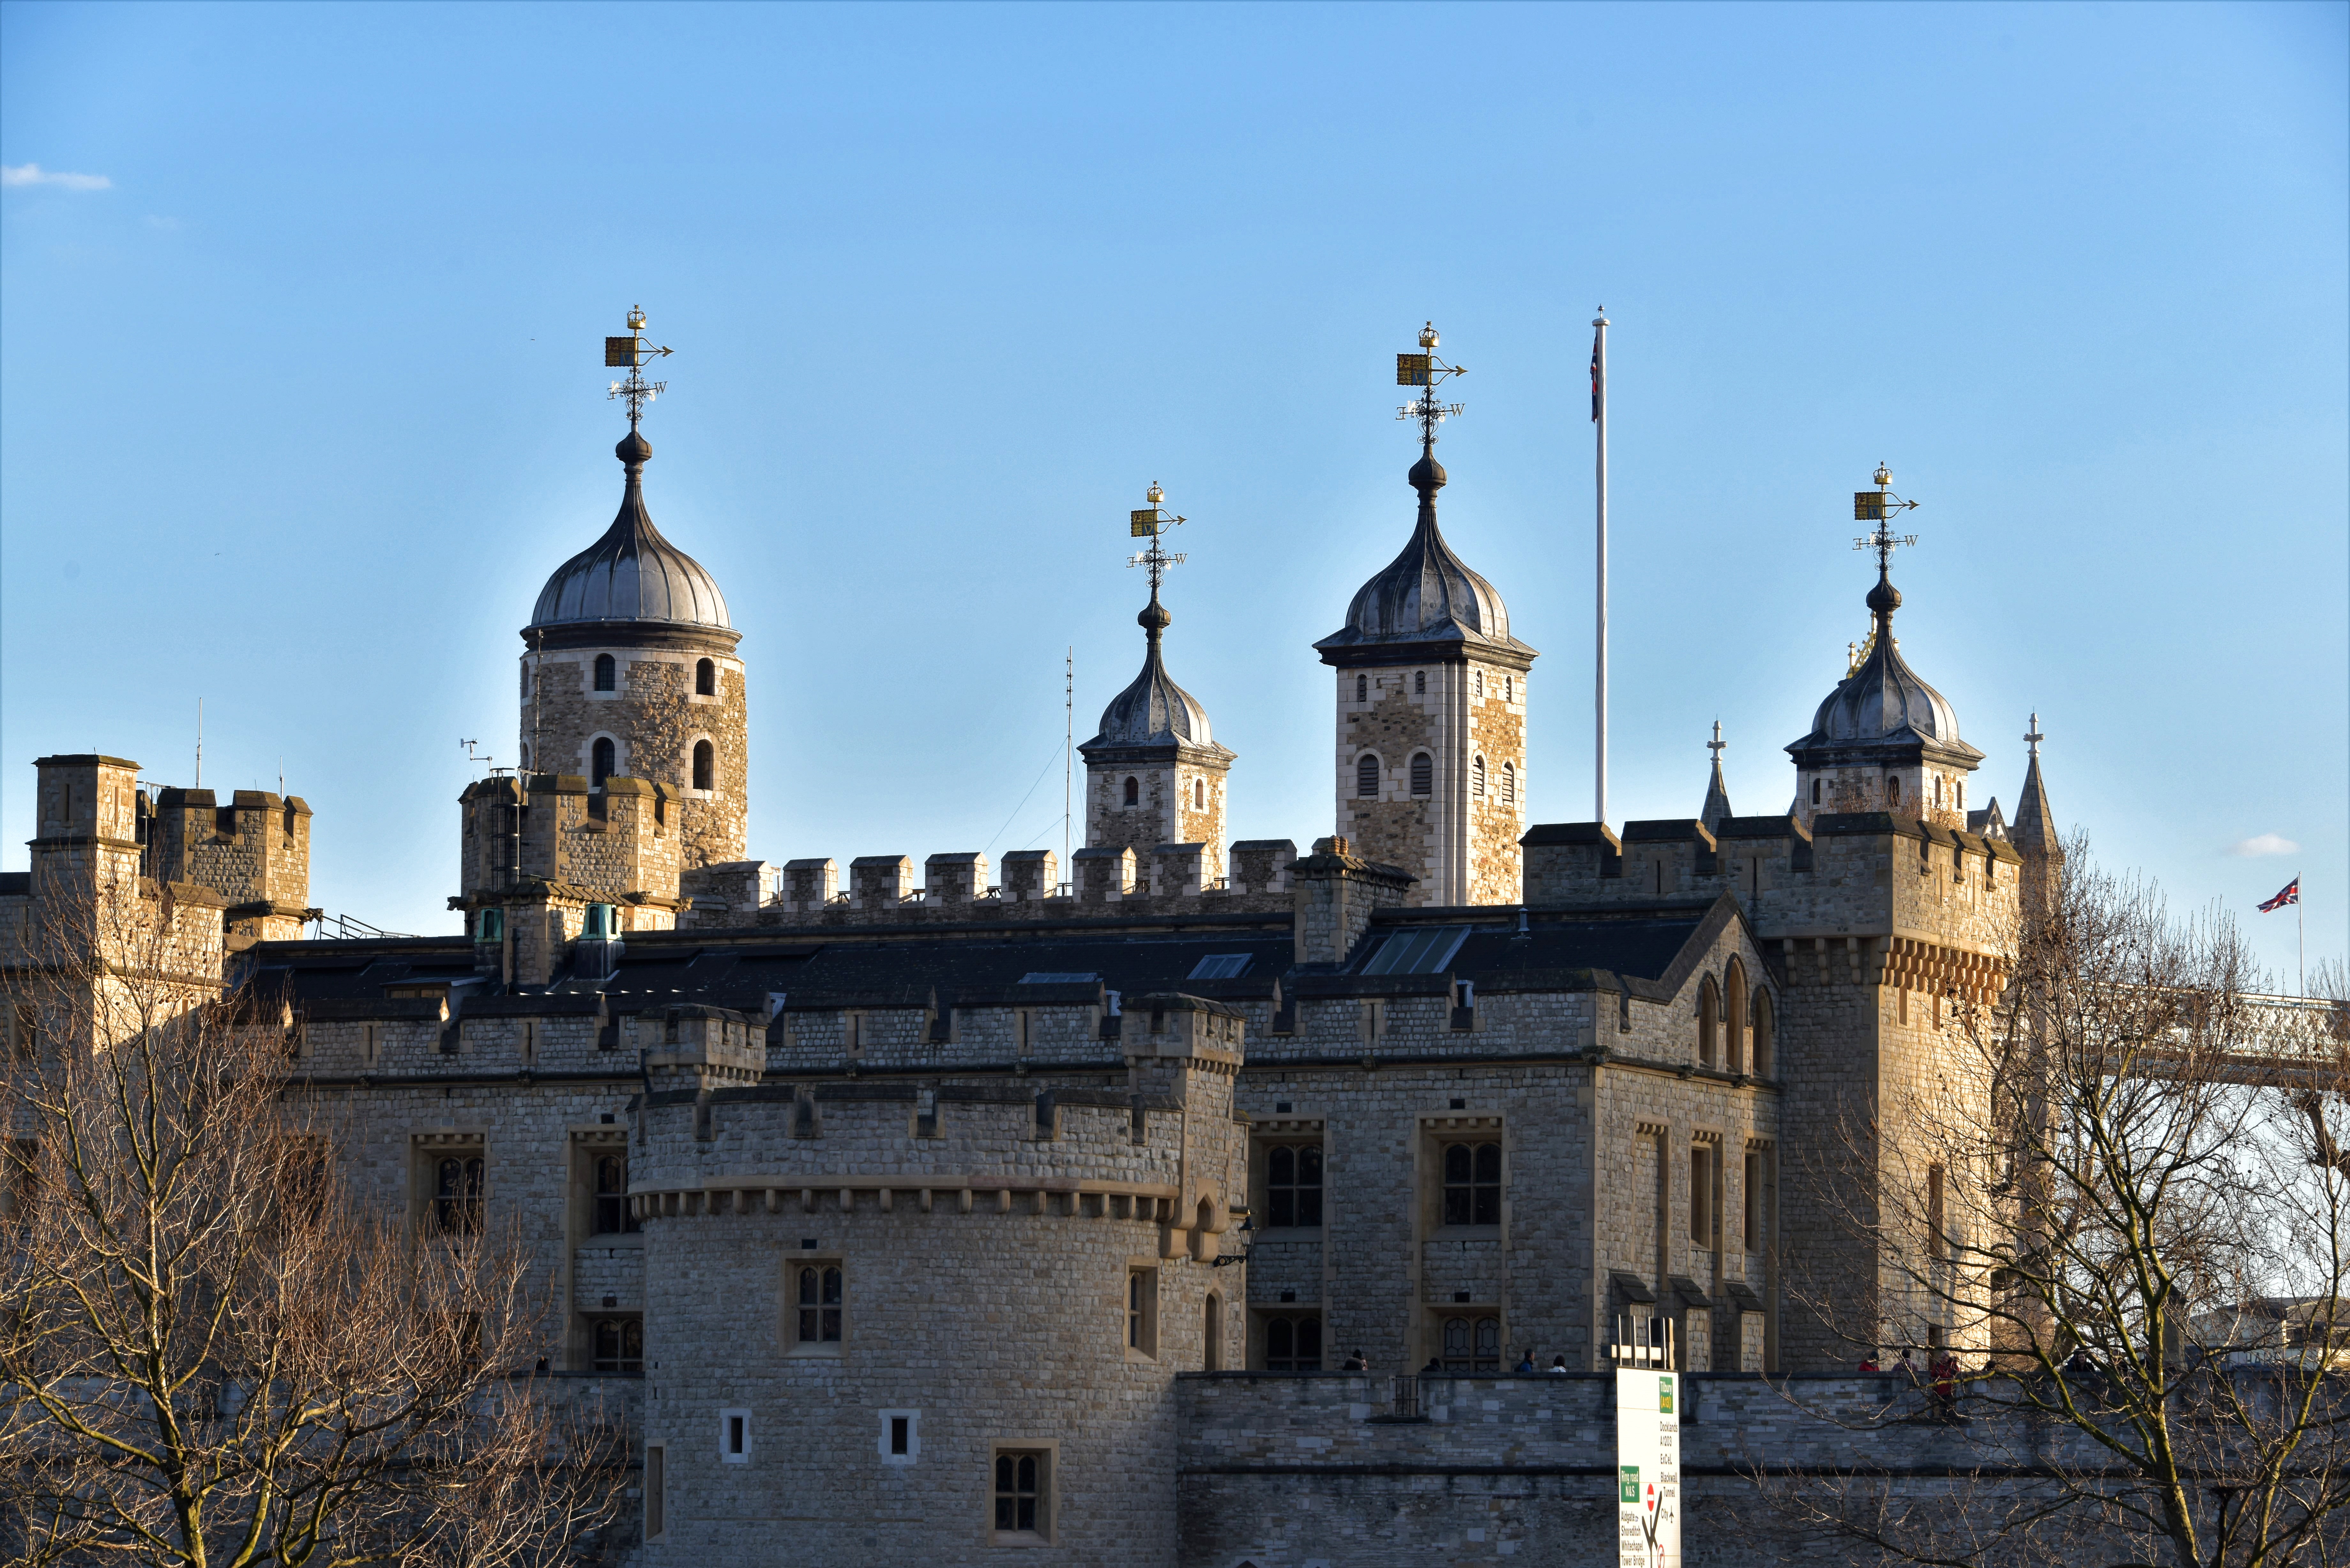 The tower. Лондонский Тауэр в Лондоне. Замок Тауэр. Tower of London дворец. Королевский замок Тауэр Лондон.